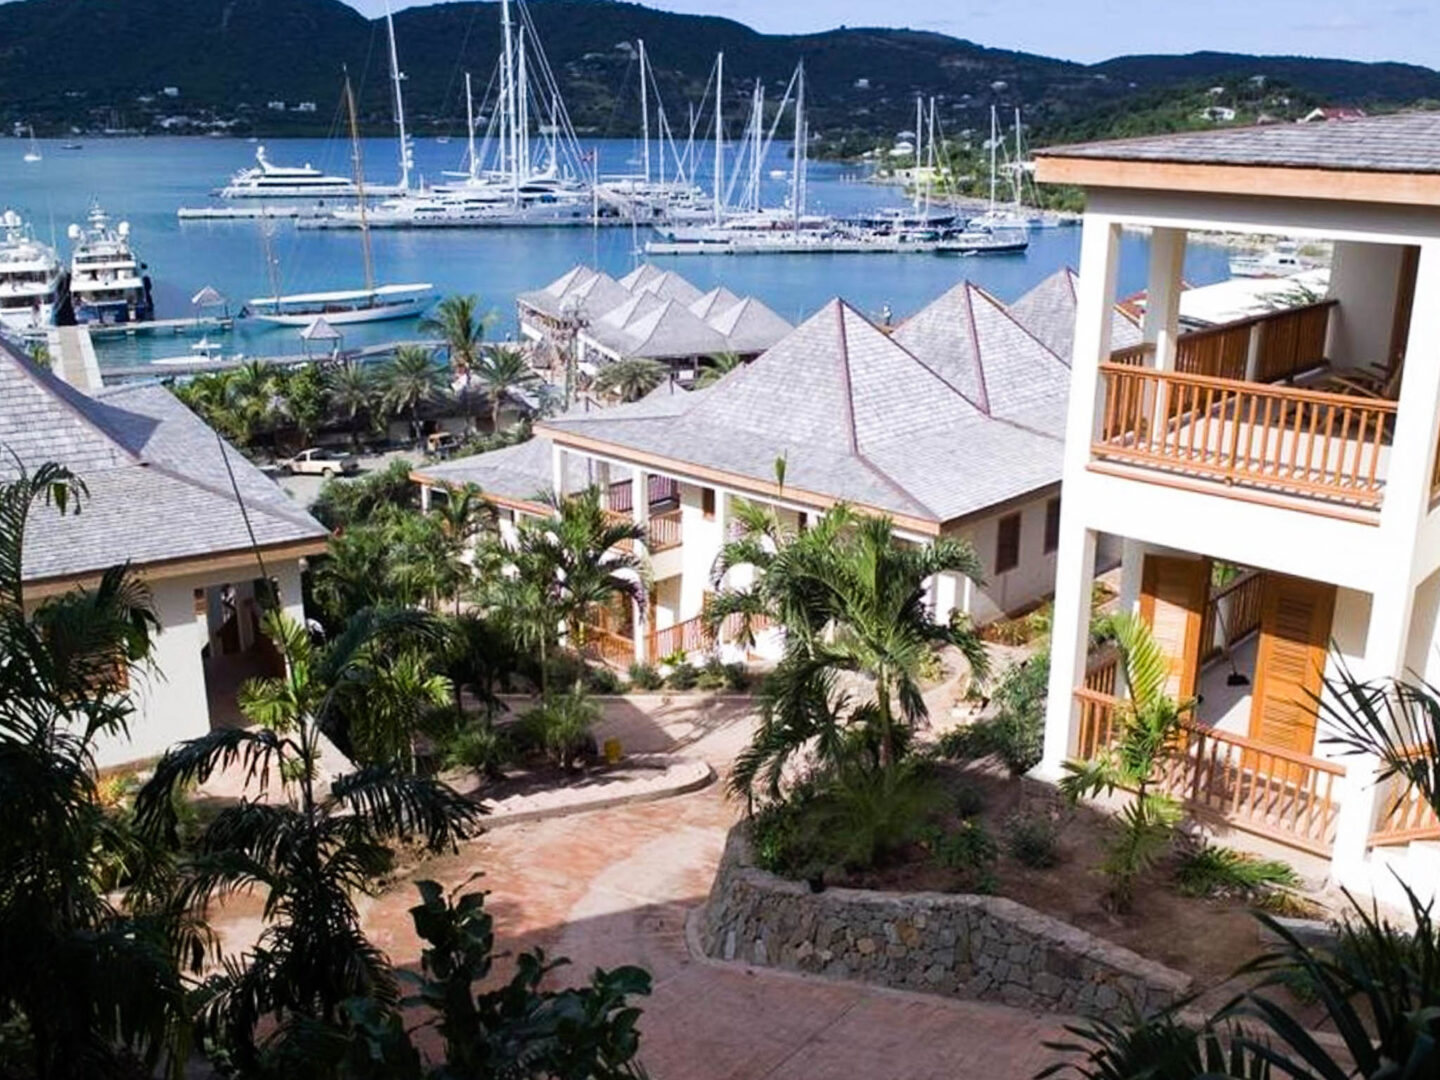 Antigua Yacht Club view